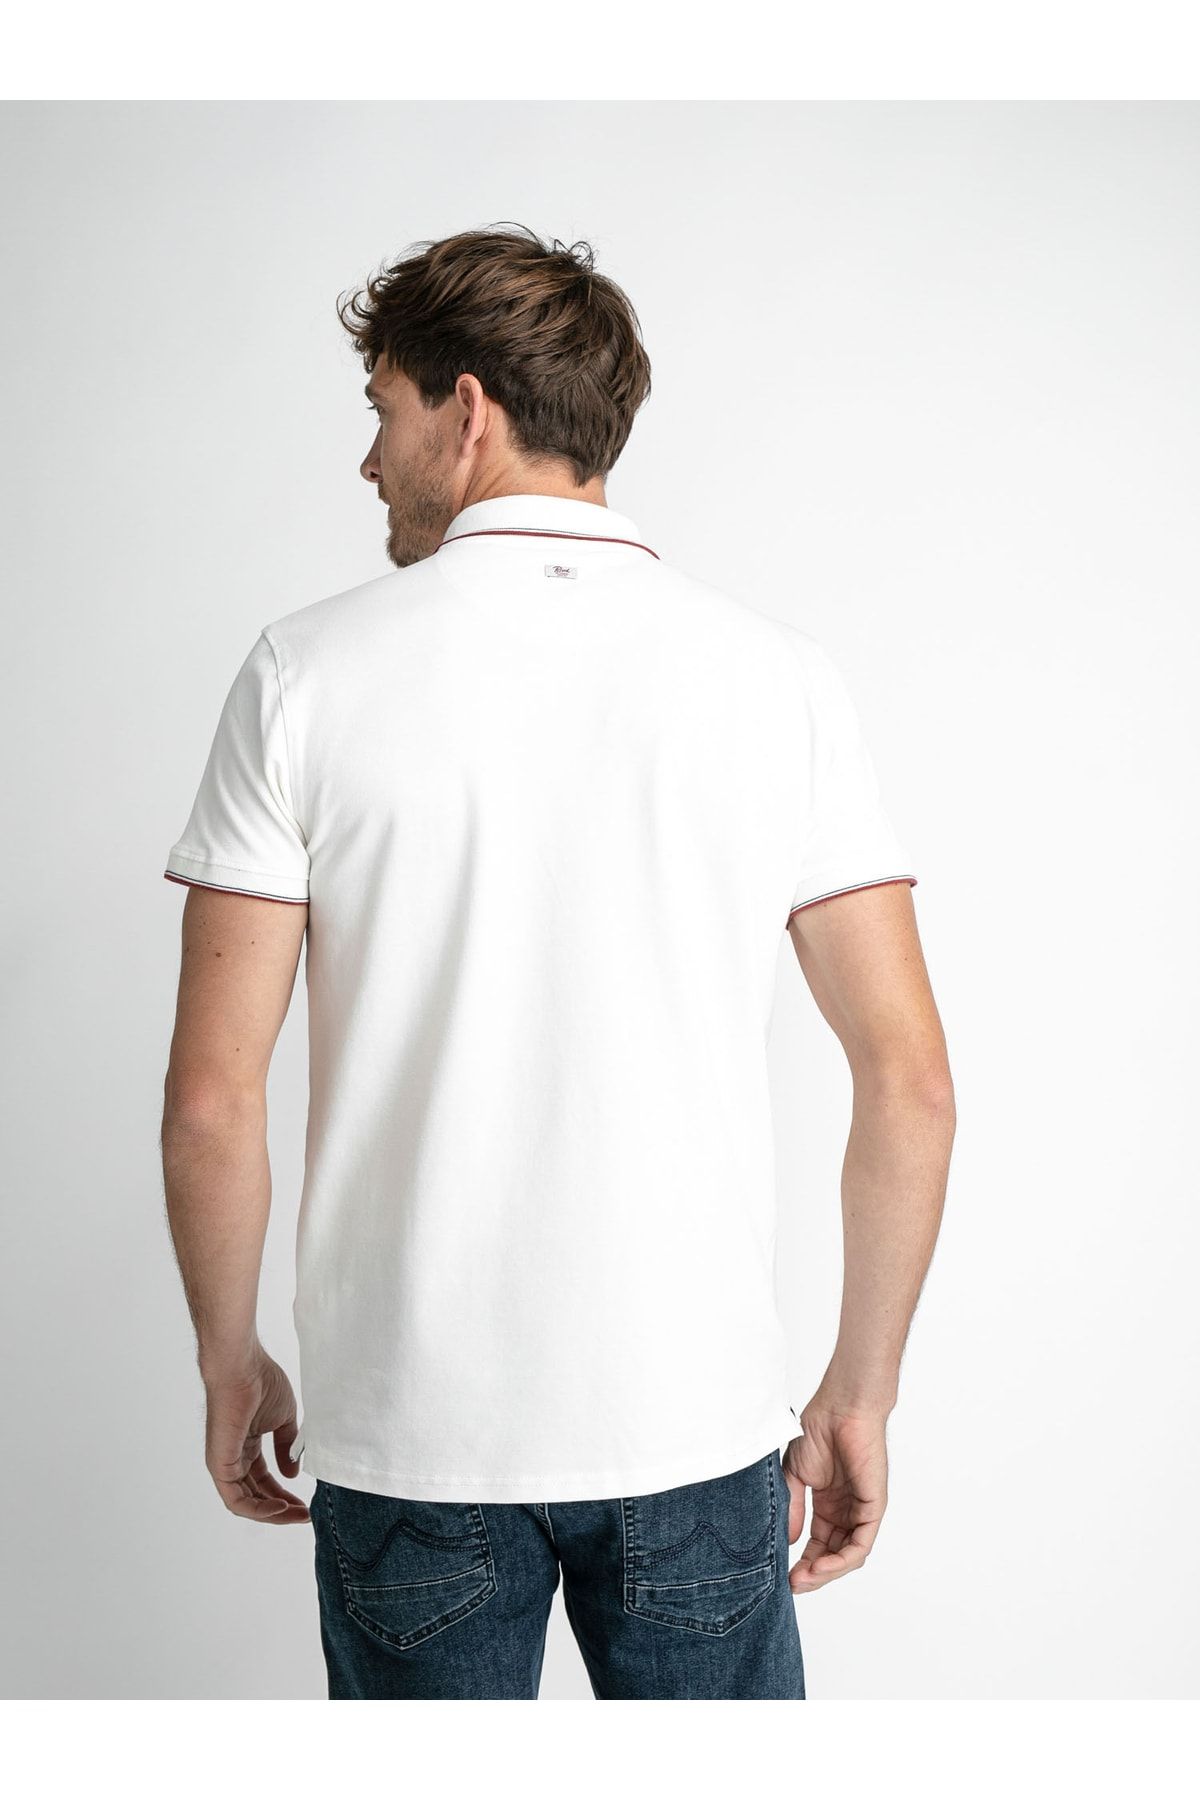 - Industries Polo Regular fit T-shirt - Trendyol White - Petrol